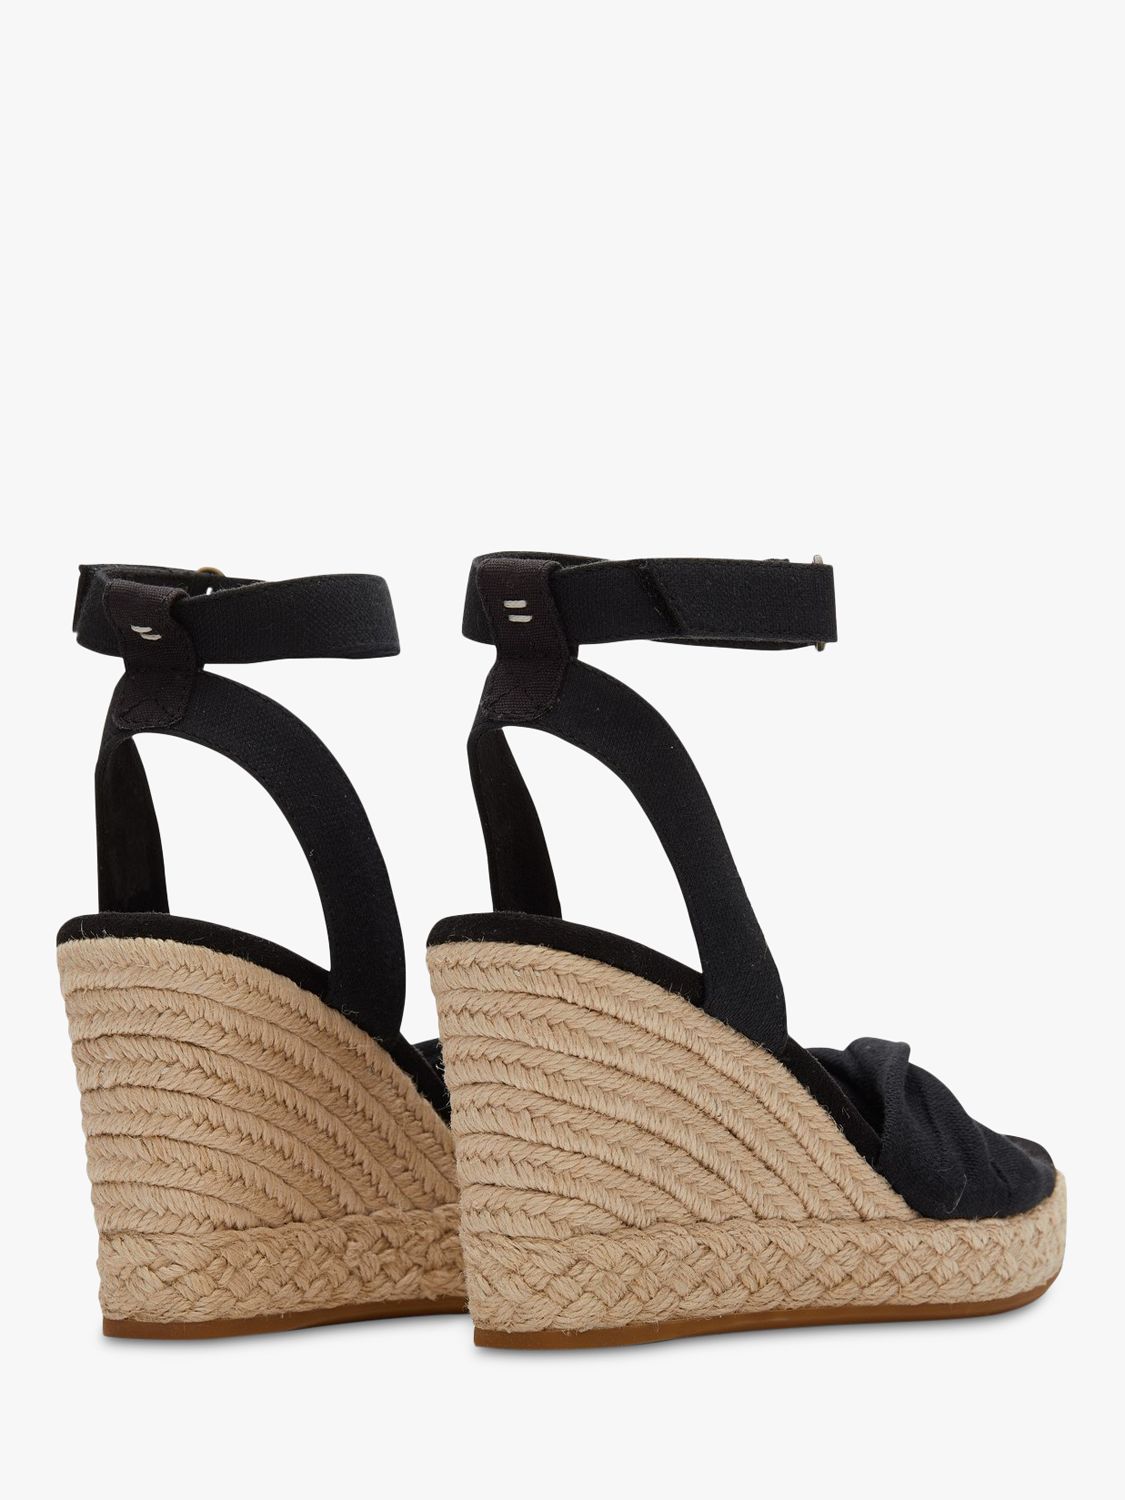 black wedge heels sandals